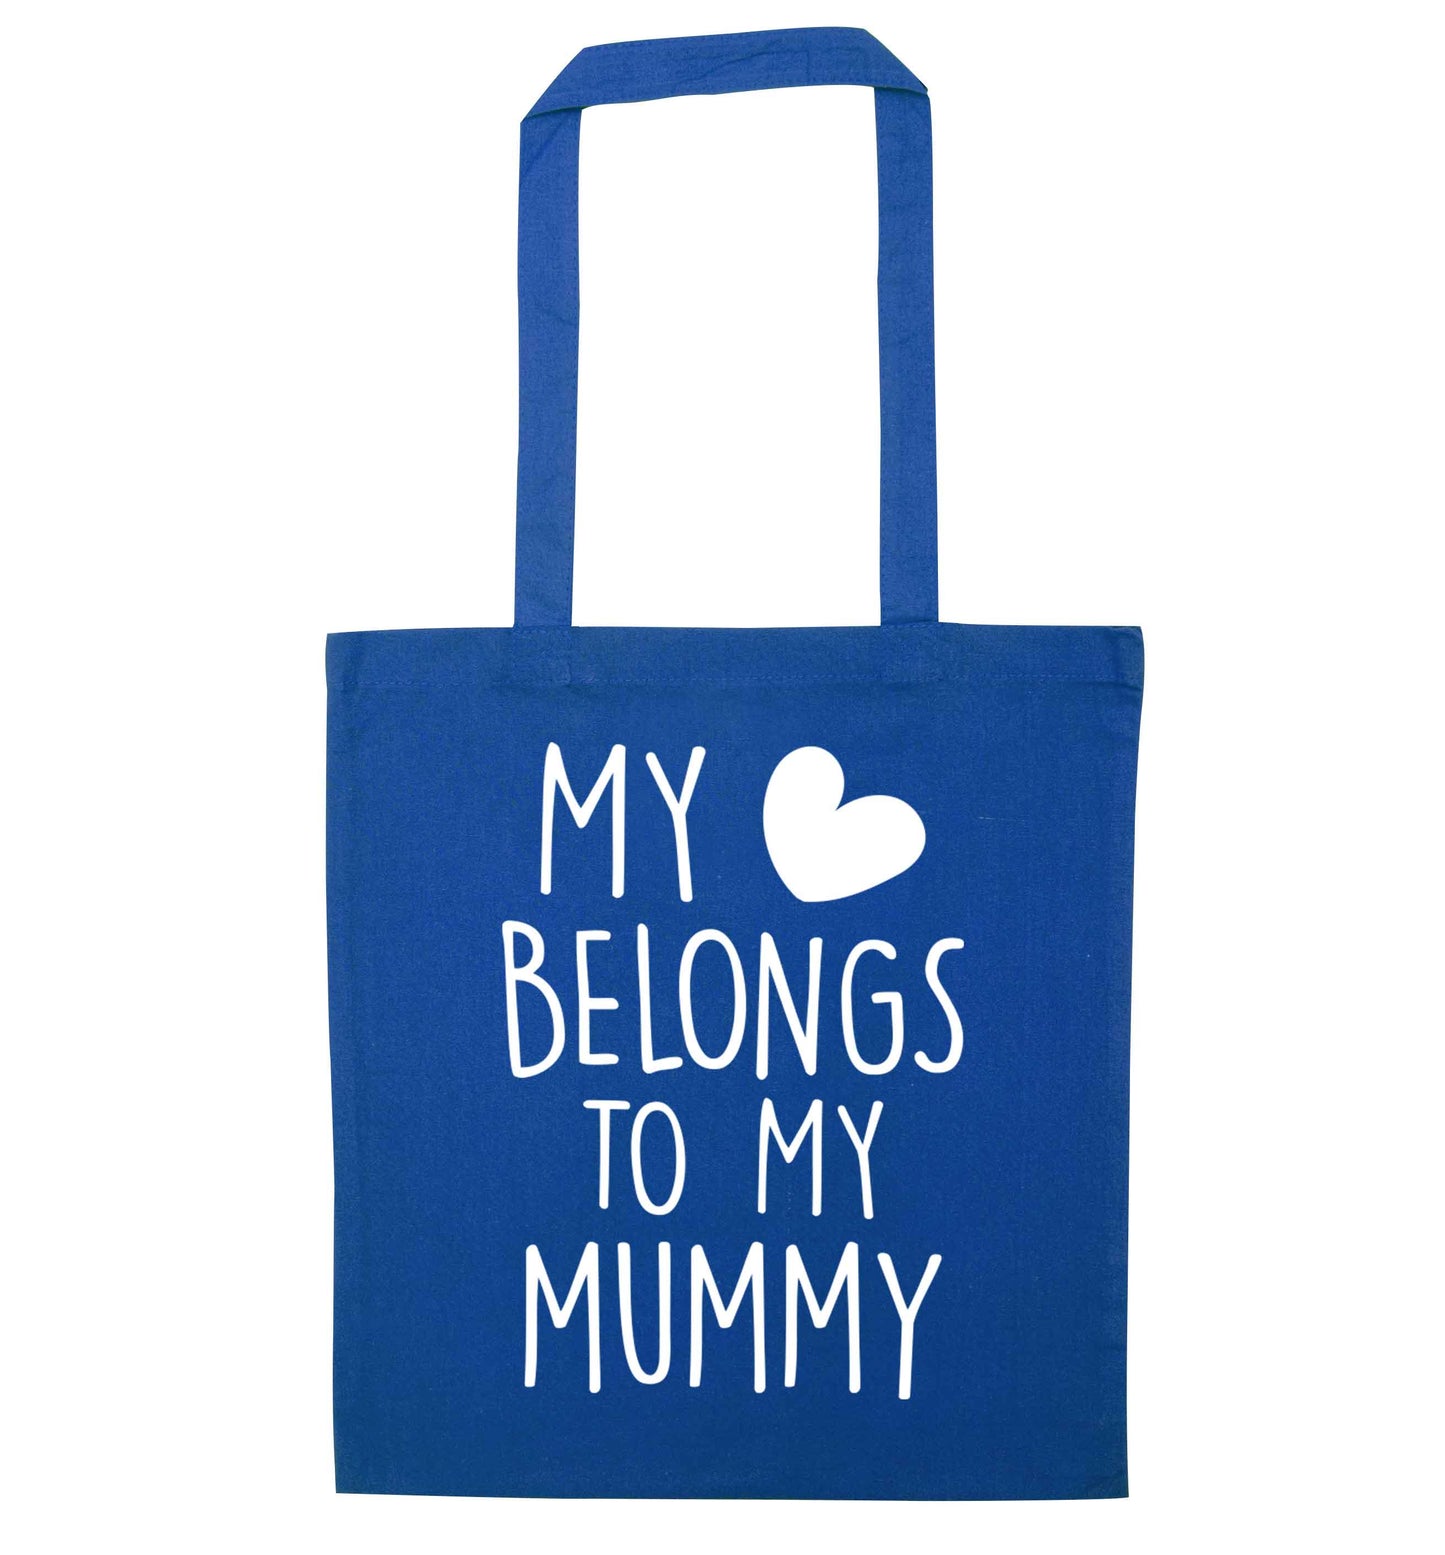 My heart belongs to my mummy blue tote bag